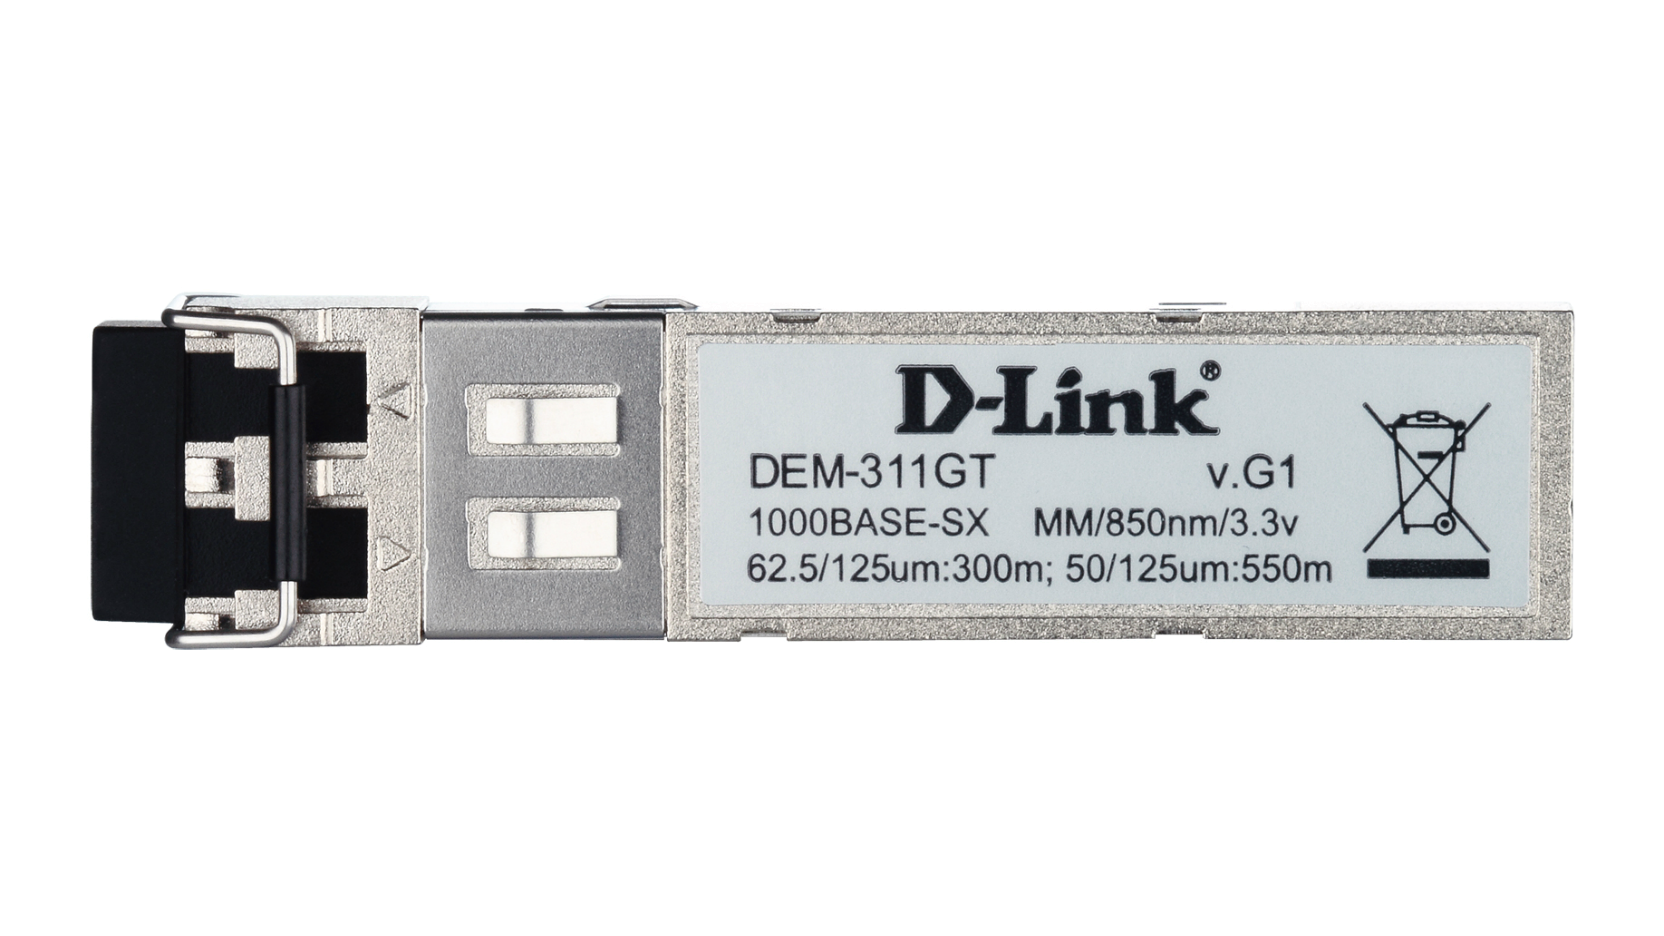 DEM-311GT SFP 1000Base-SX Multi-mode Fibre Transceiver | D-Link UK